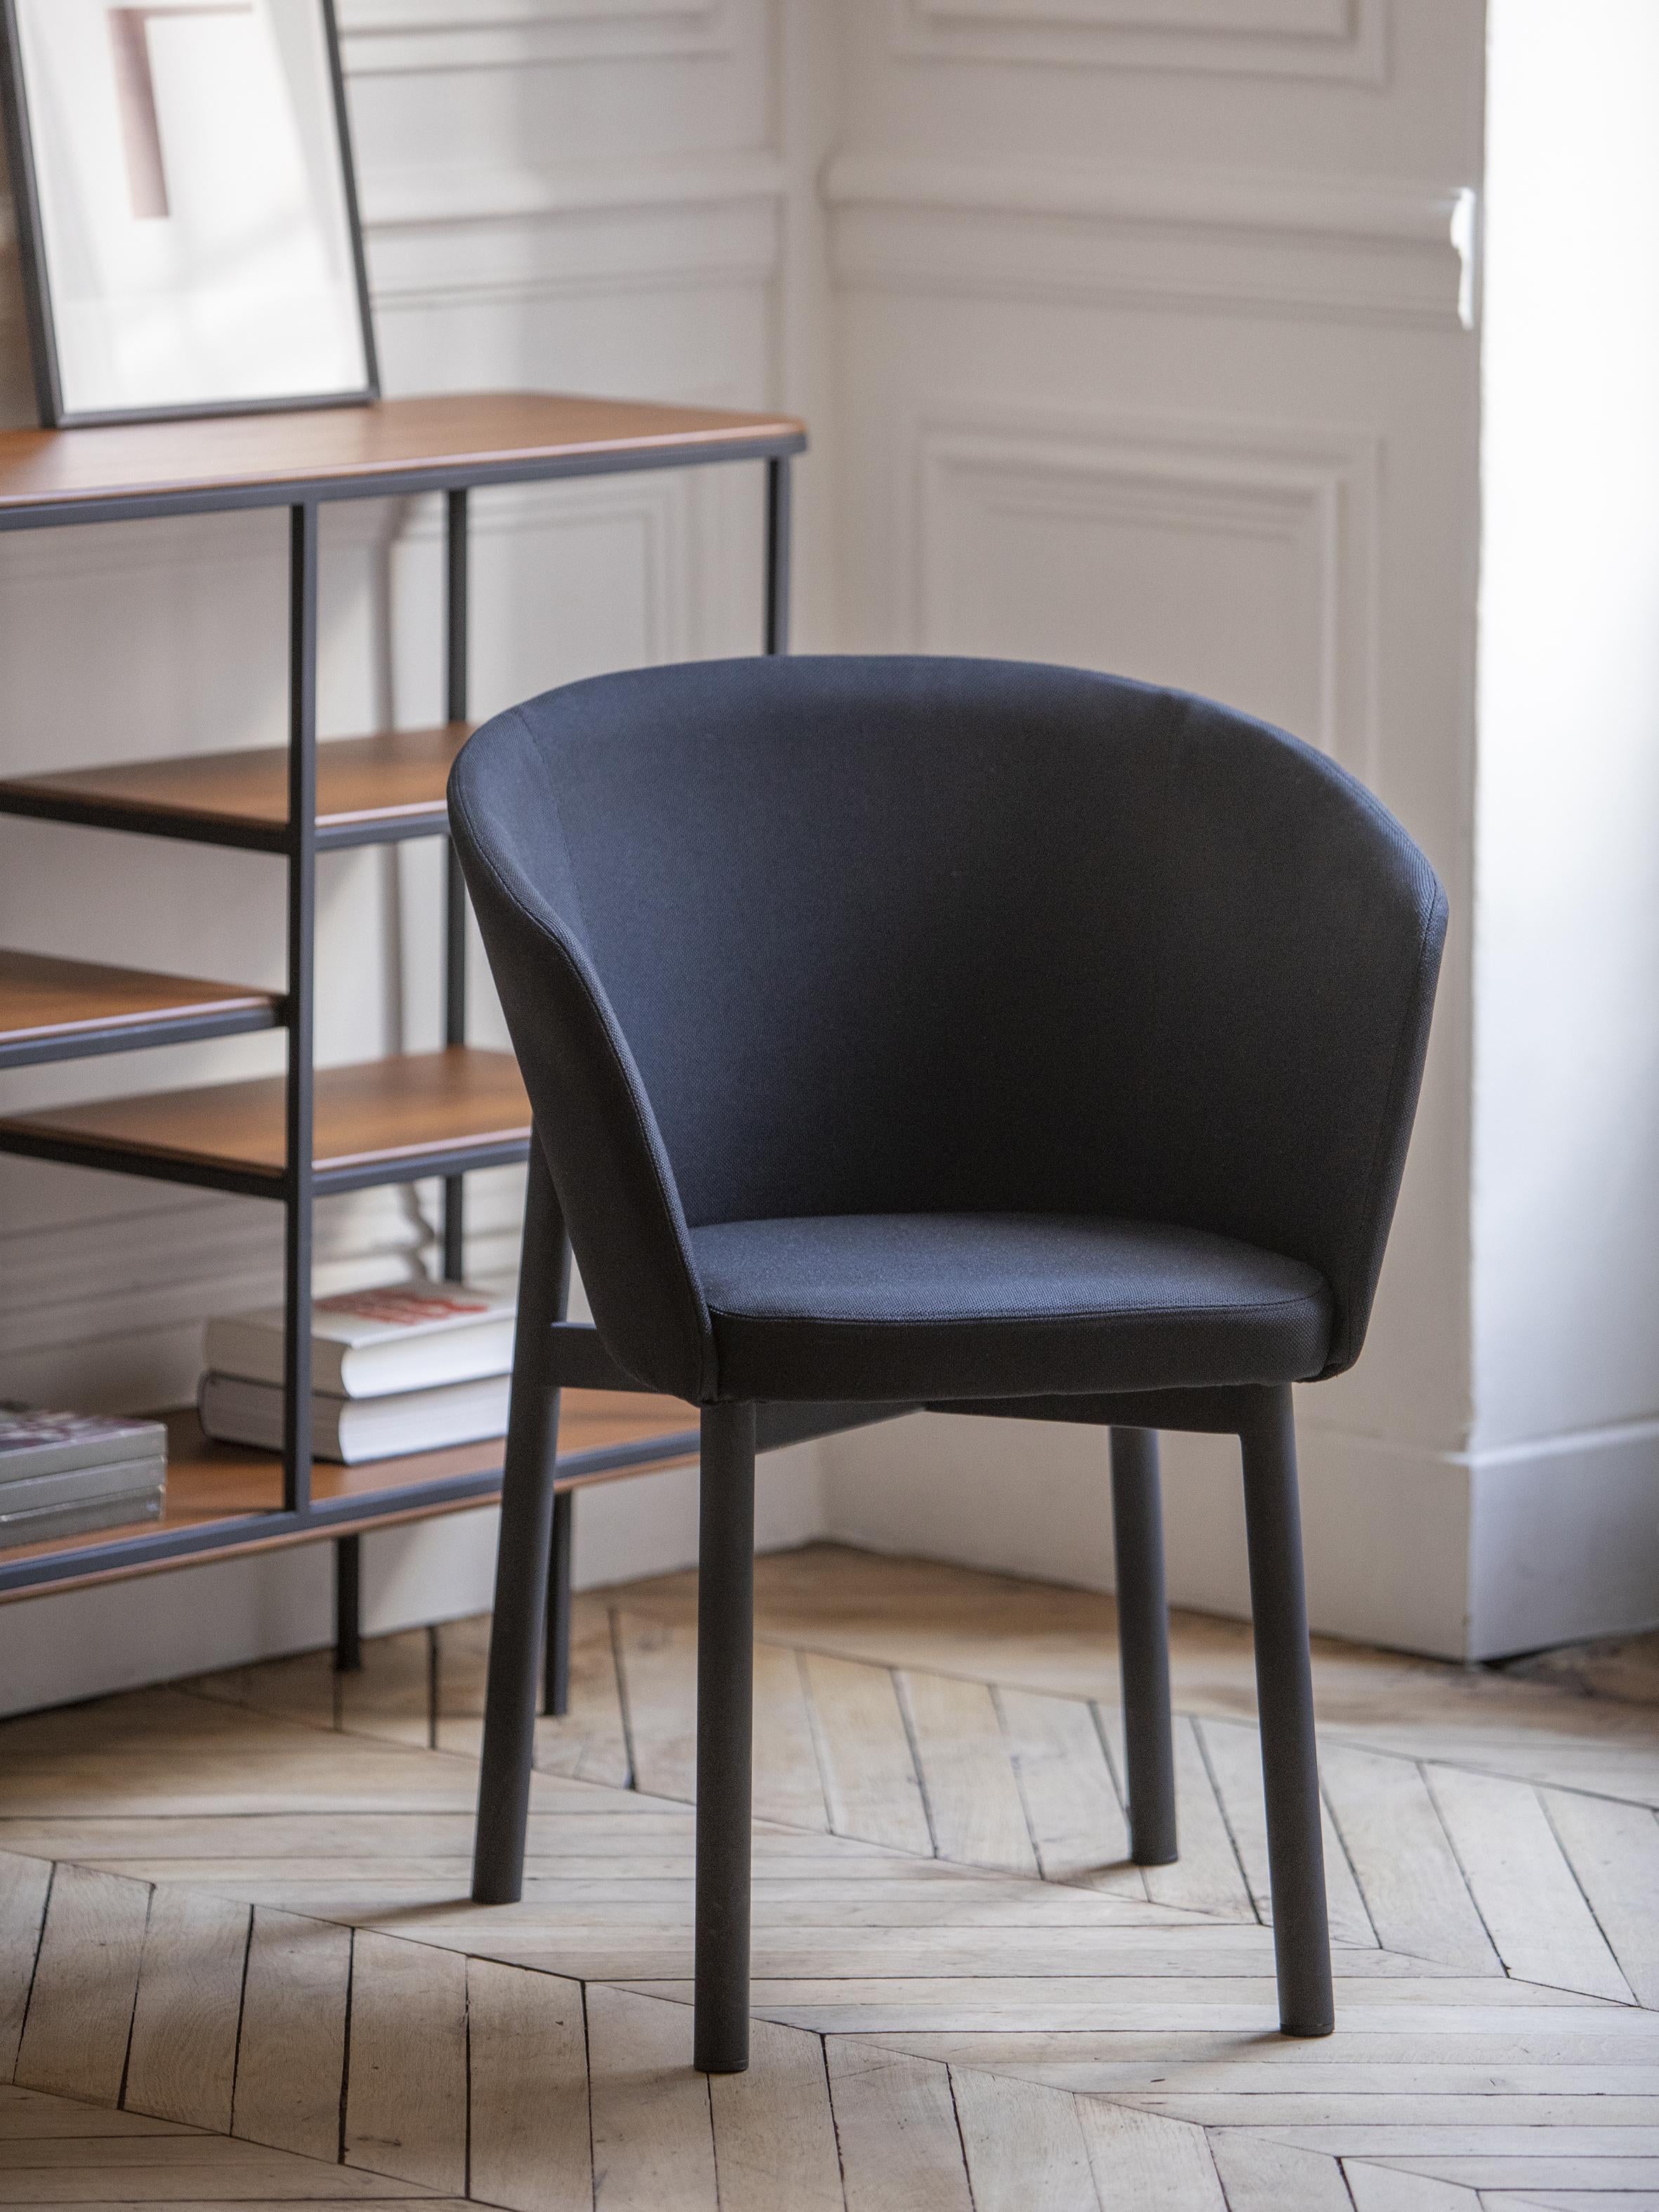 French Set of 4 Black Residence Bridge Armchair by Kann Design For Sale